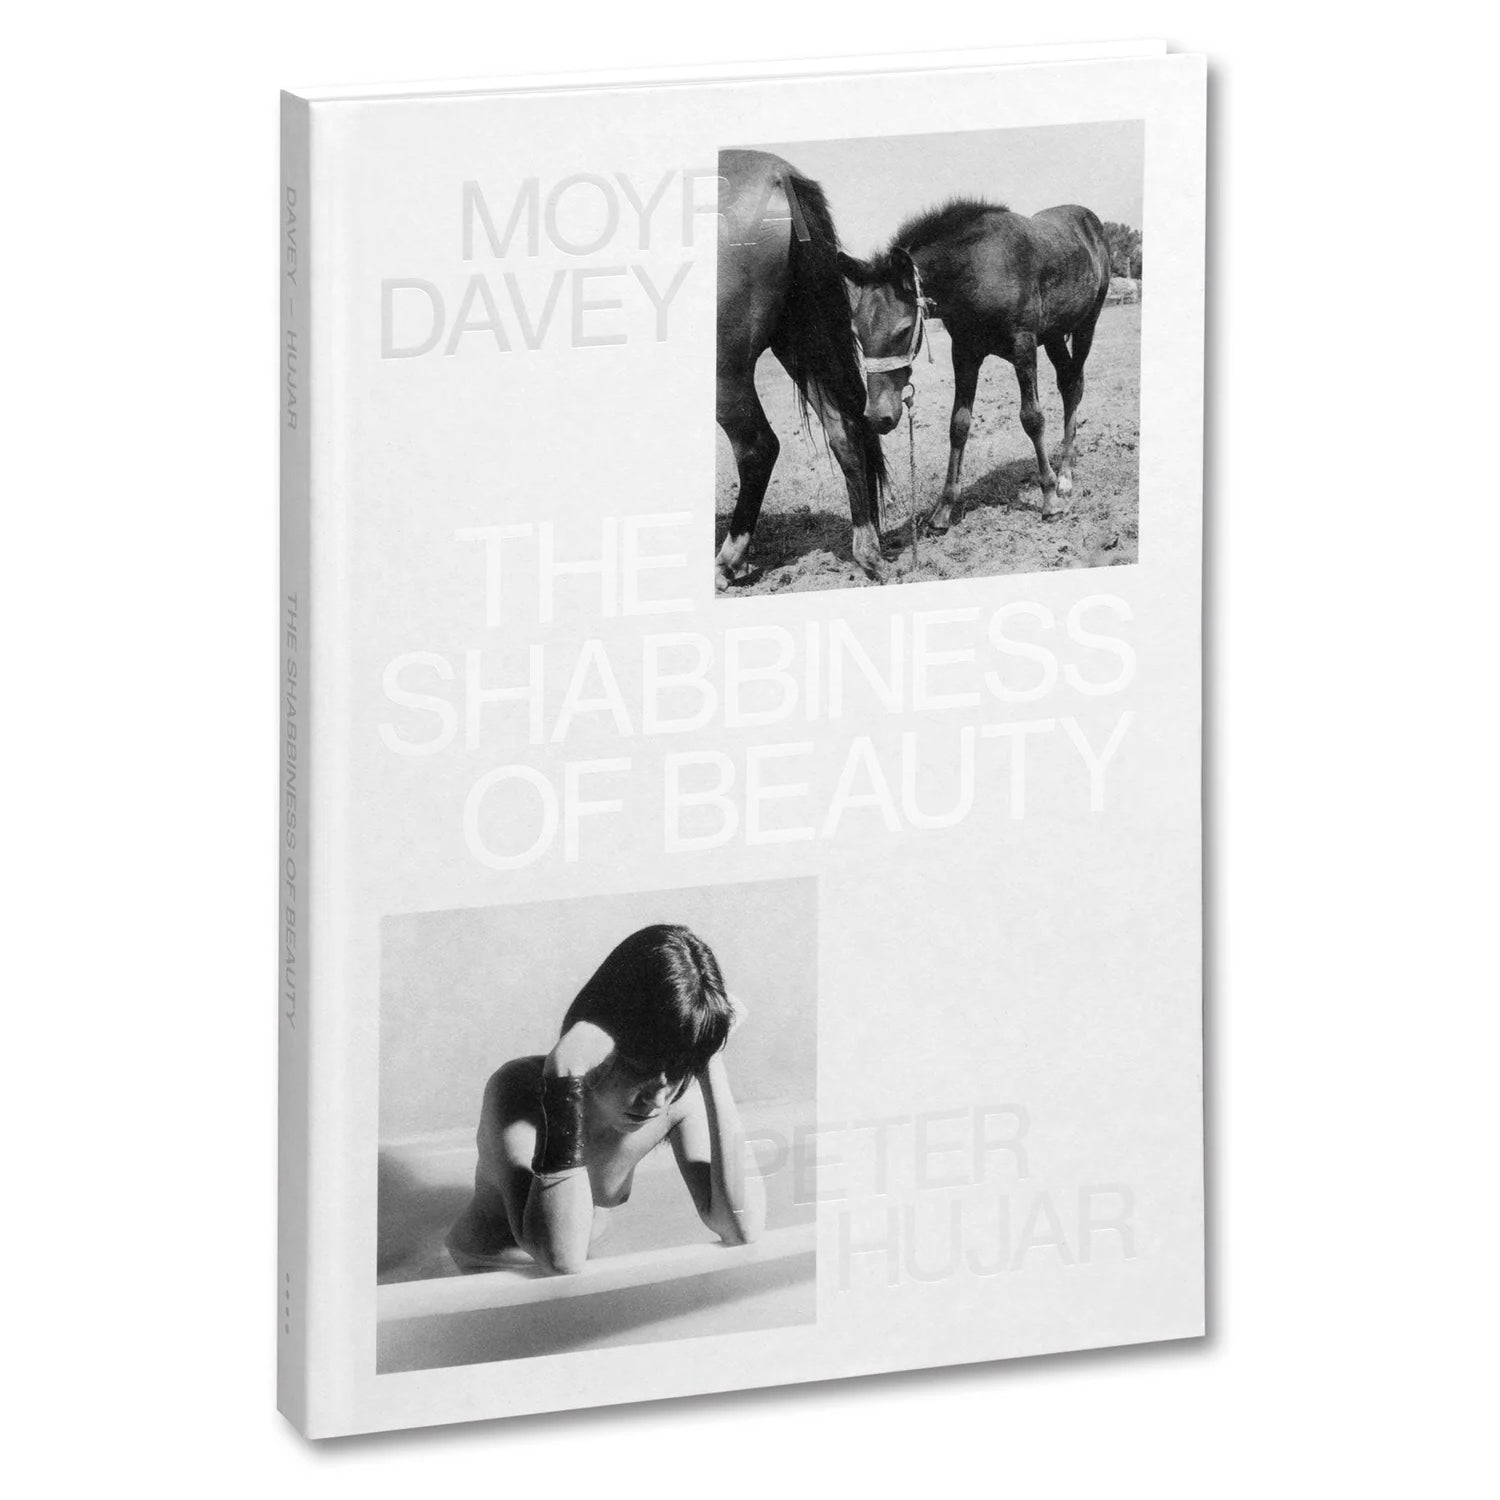 The Shabbiness of Beauty Moyra by Davey & Peter Hujar